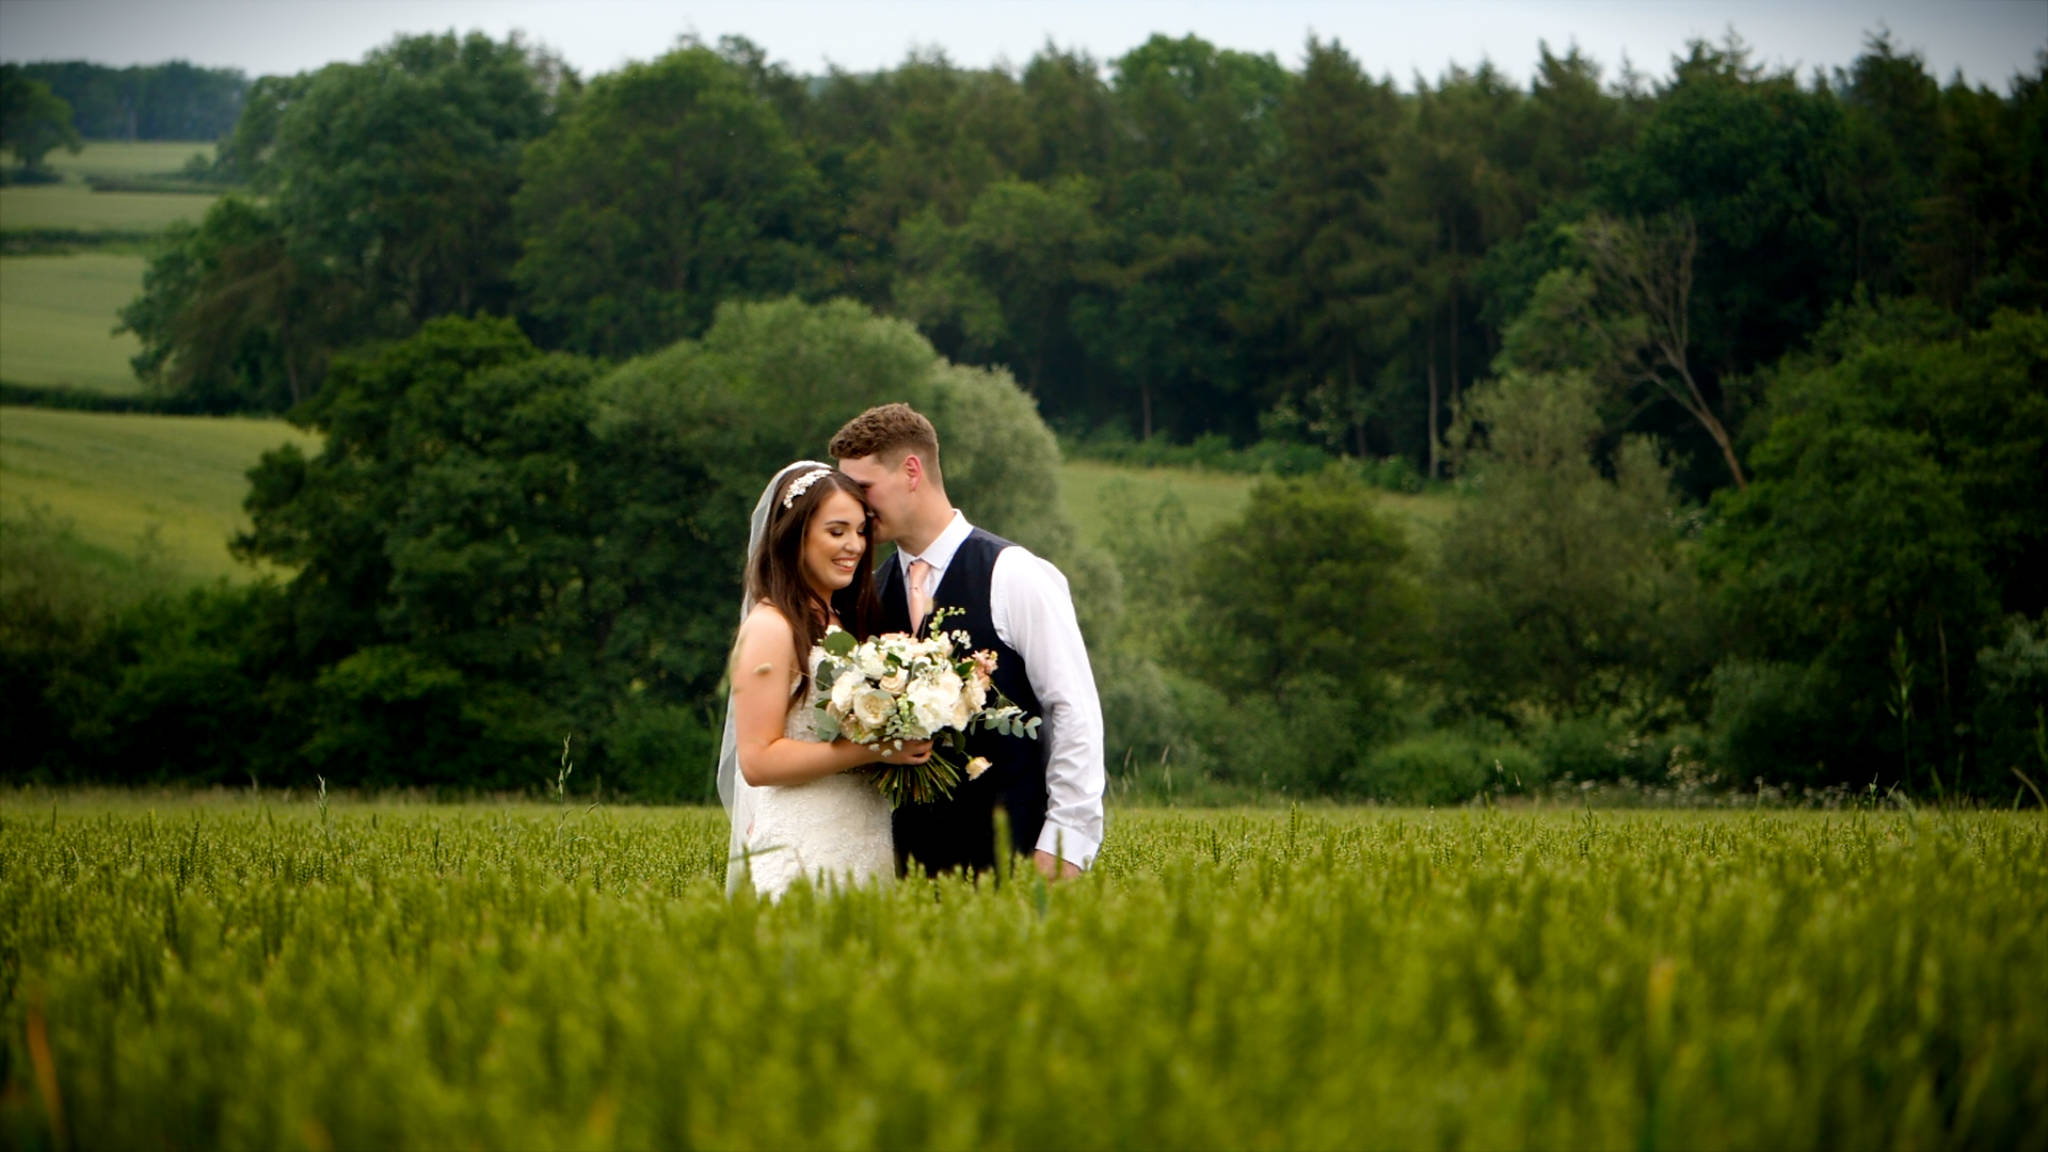 Wedding videographer Gloucestershire